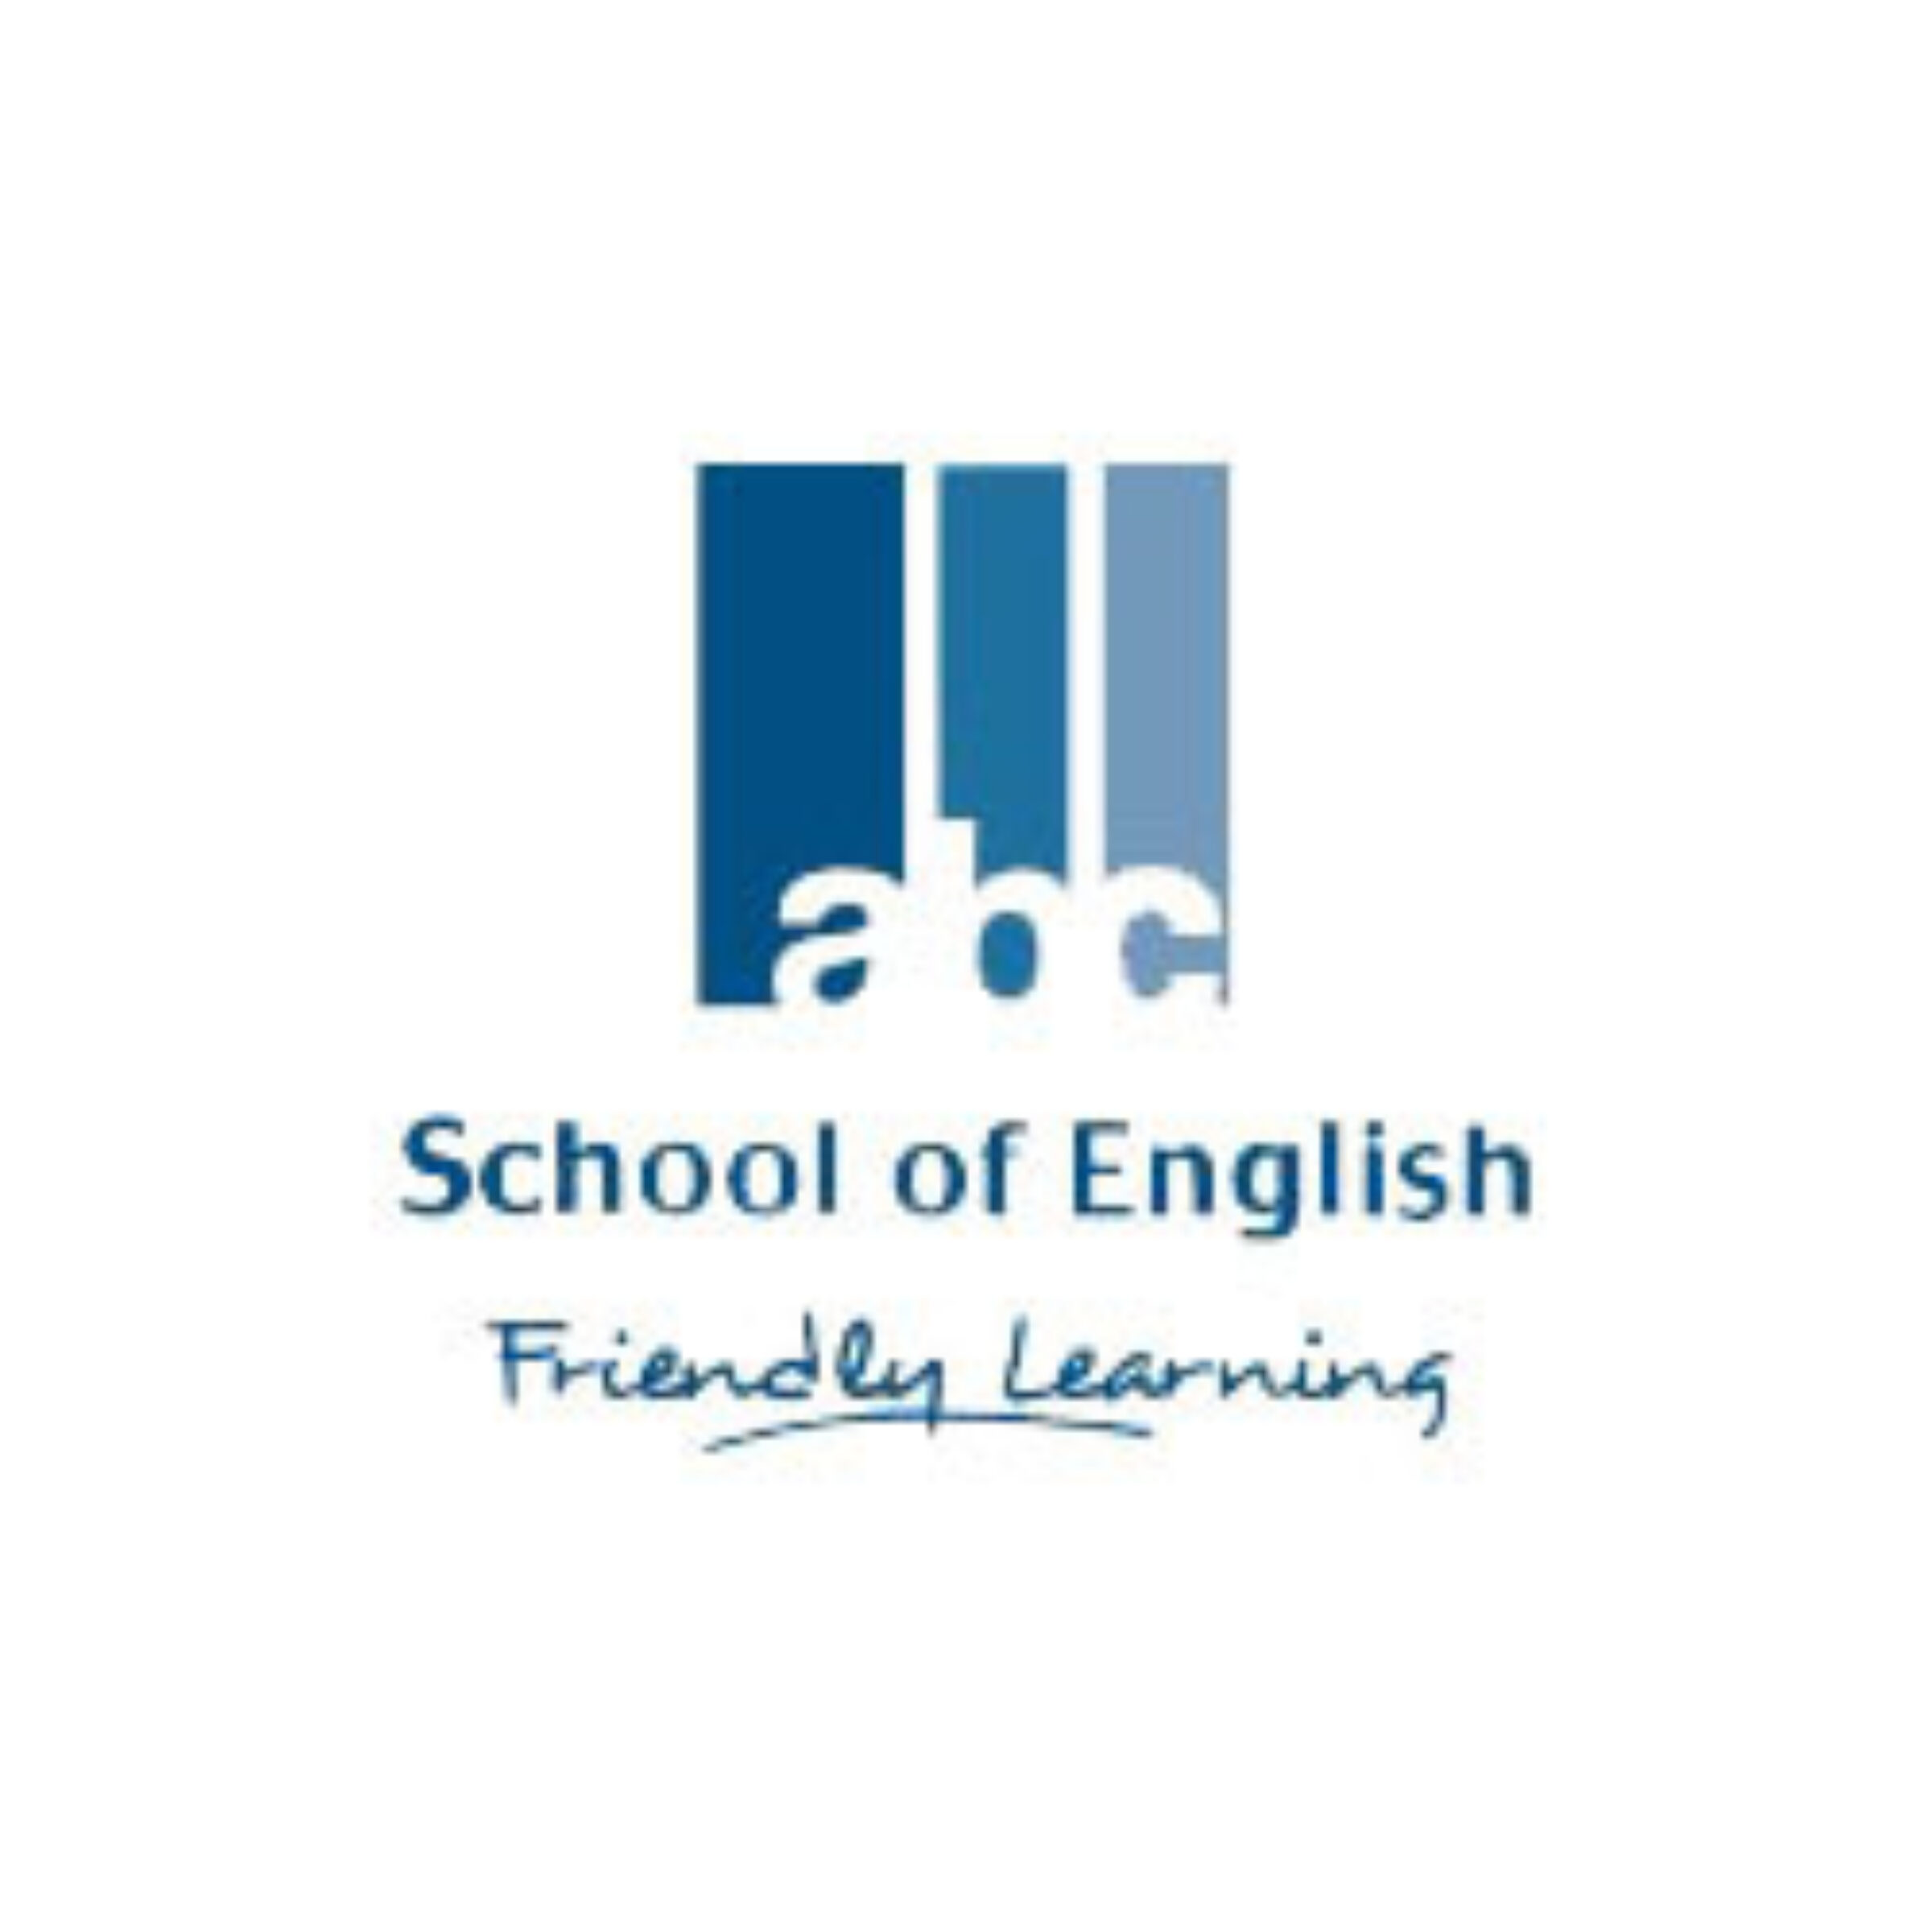 ABC Logo friendly learning 2016 copy